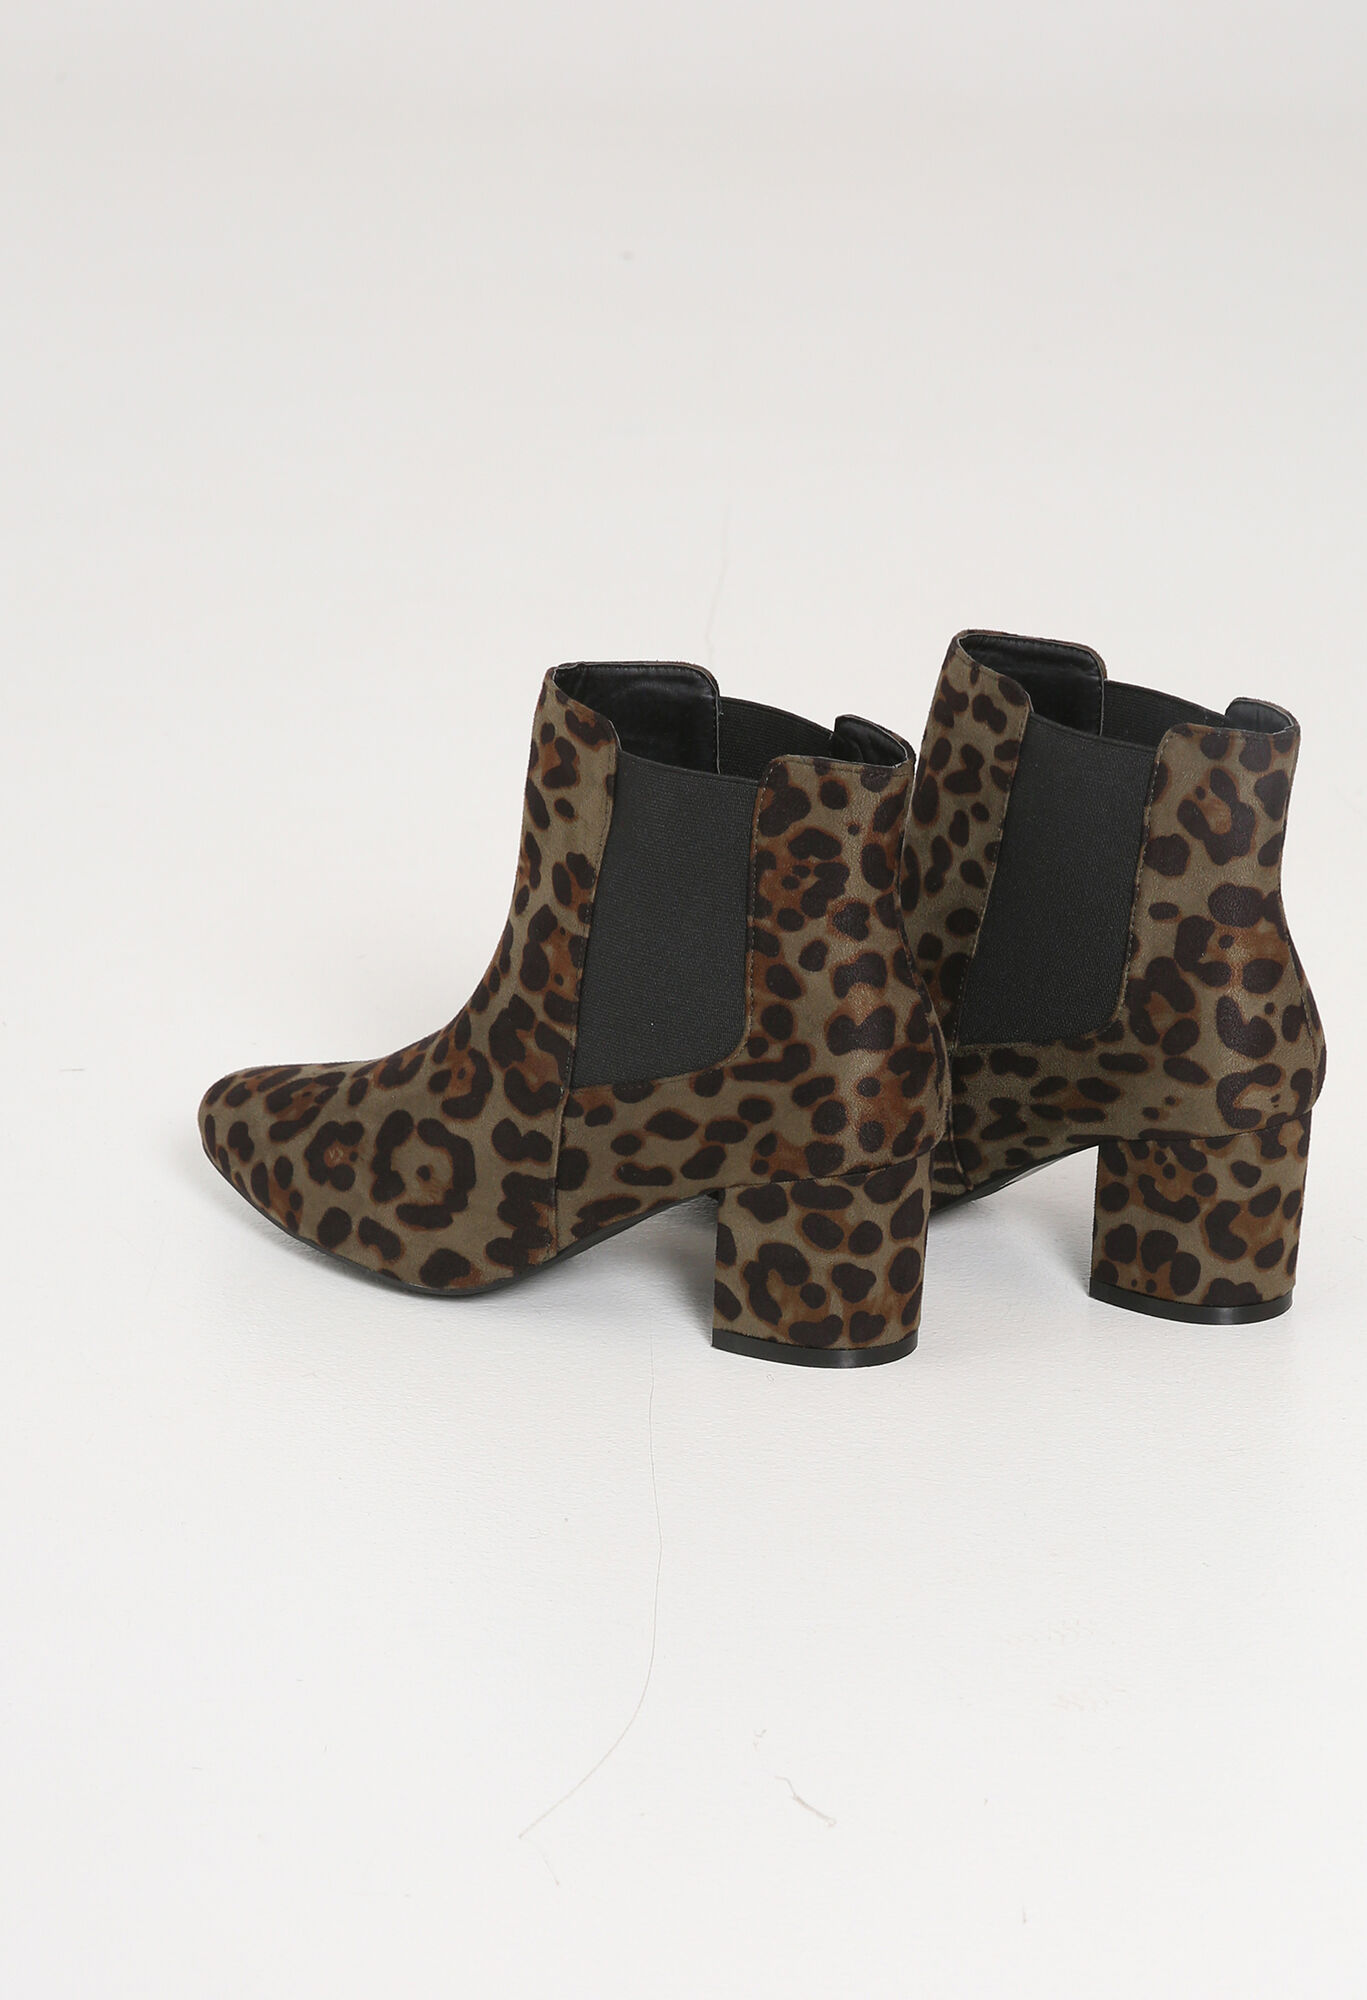 Bottines léopard pieds larges - Kaki - Paprika